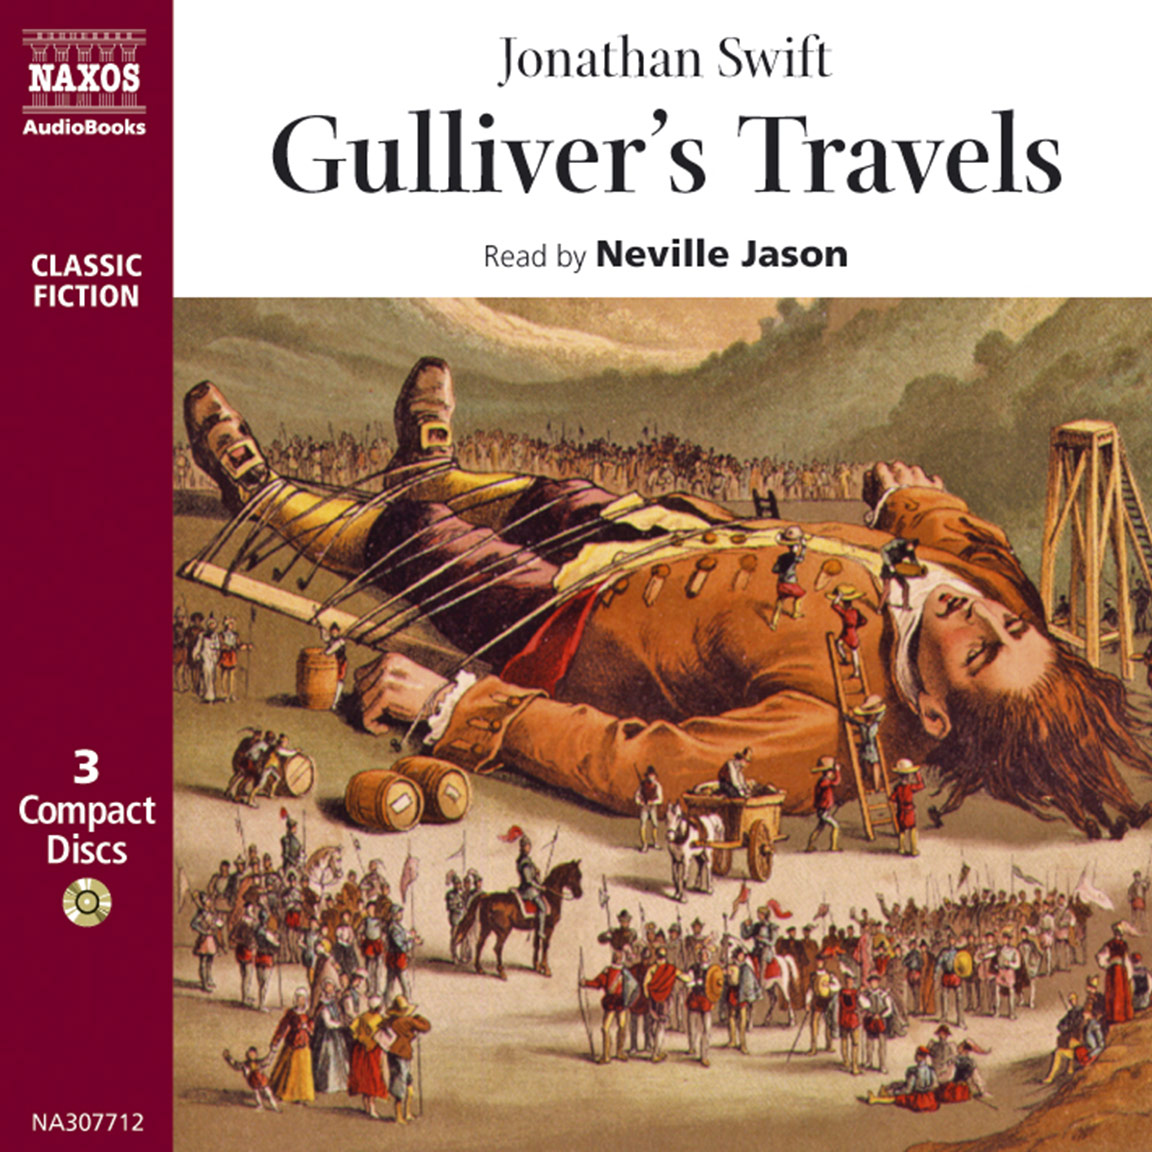 Gulliverâ€™s Travels (abridged) â€“ Naxos AudioBooks